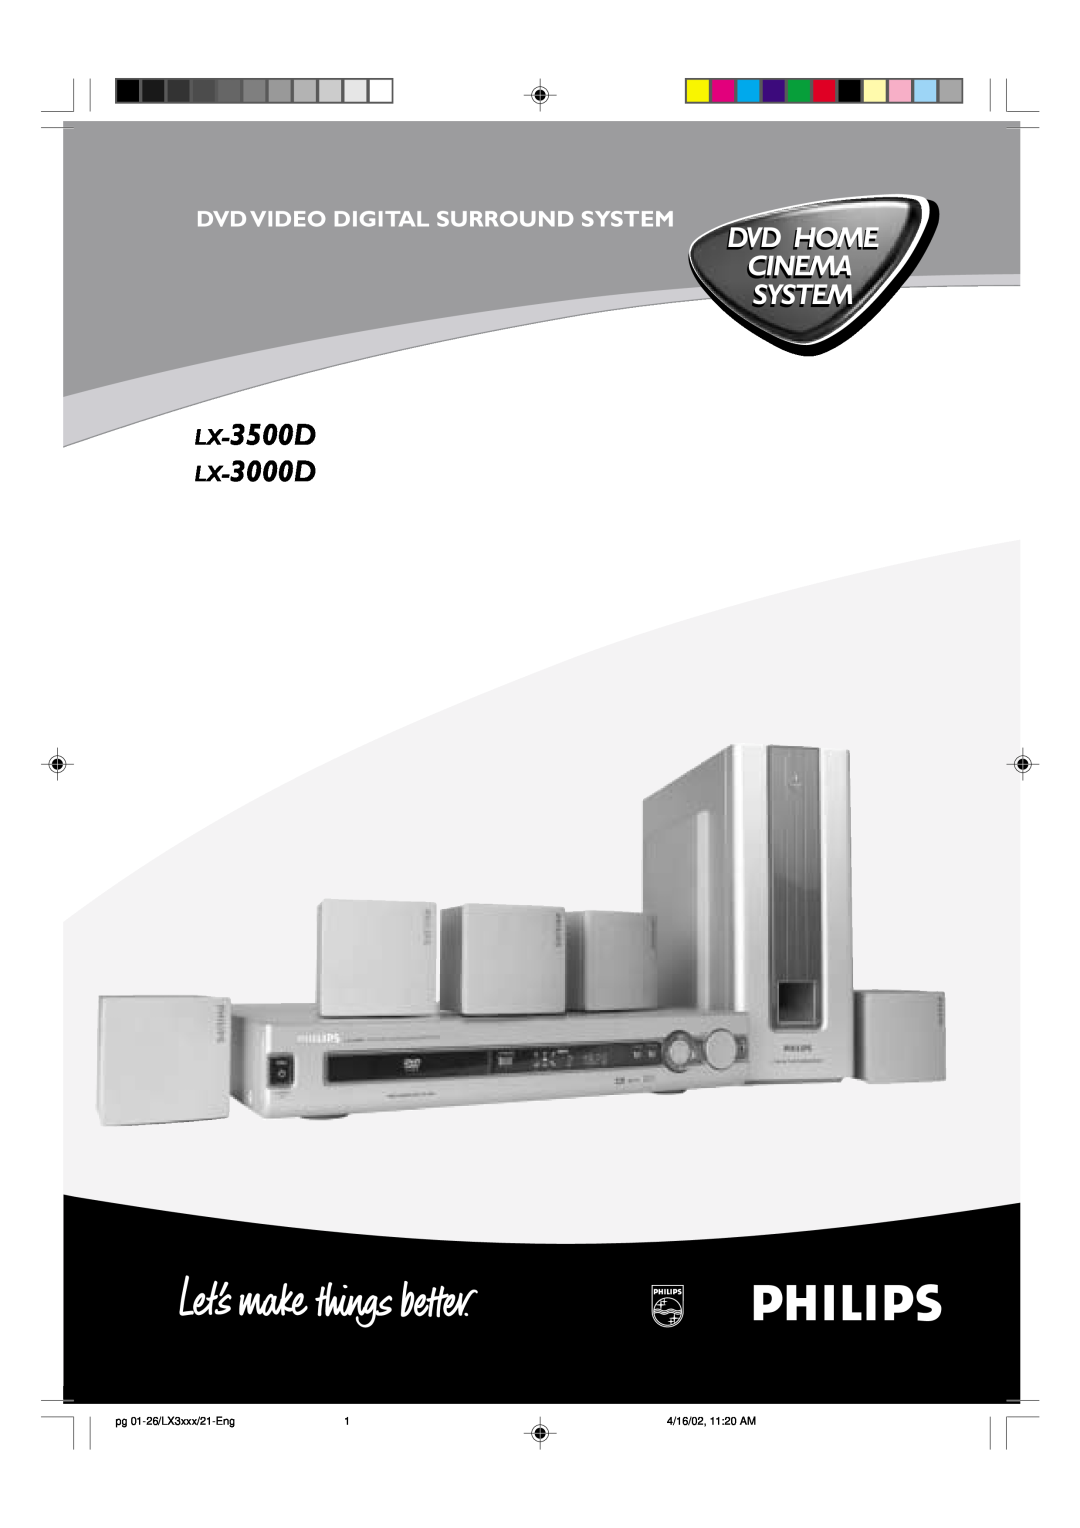 Philips LX3000D manual LX-3500D LX-3000D, Dvd Home Cinema System, Dvd Video Digital Surround System, 4/16/02, 11 20 AM 